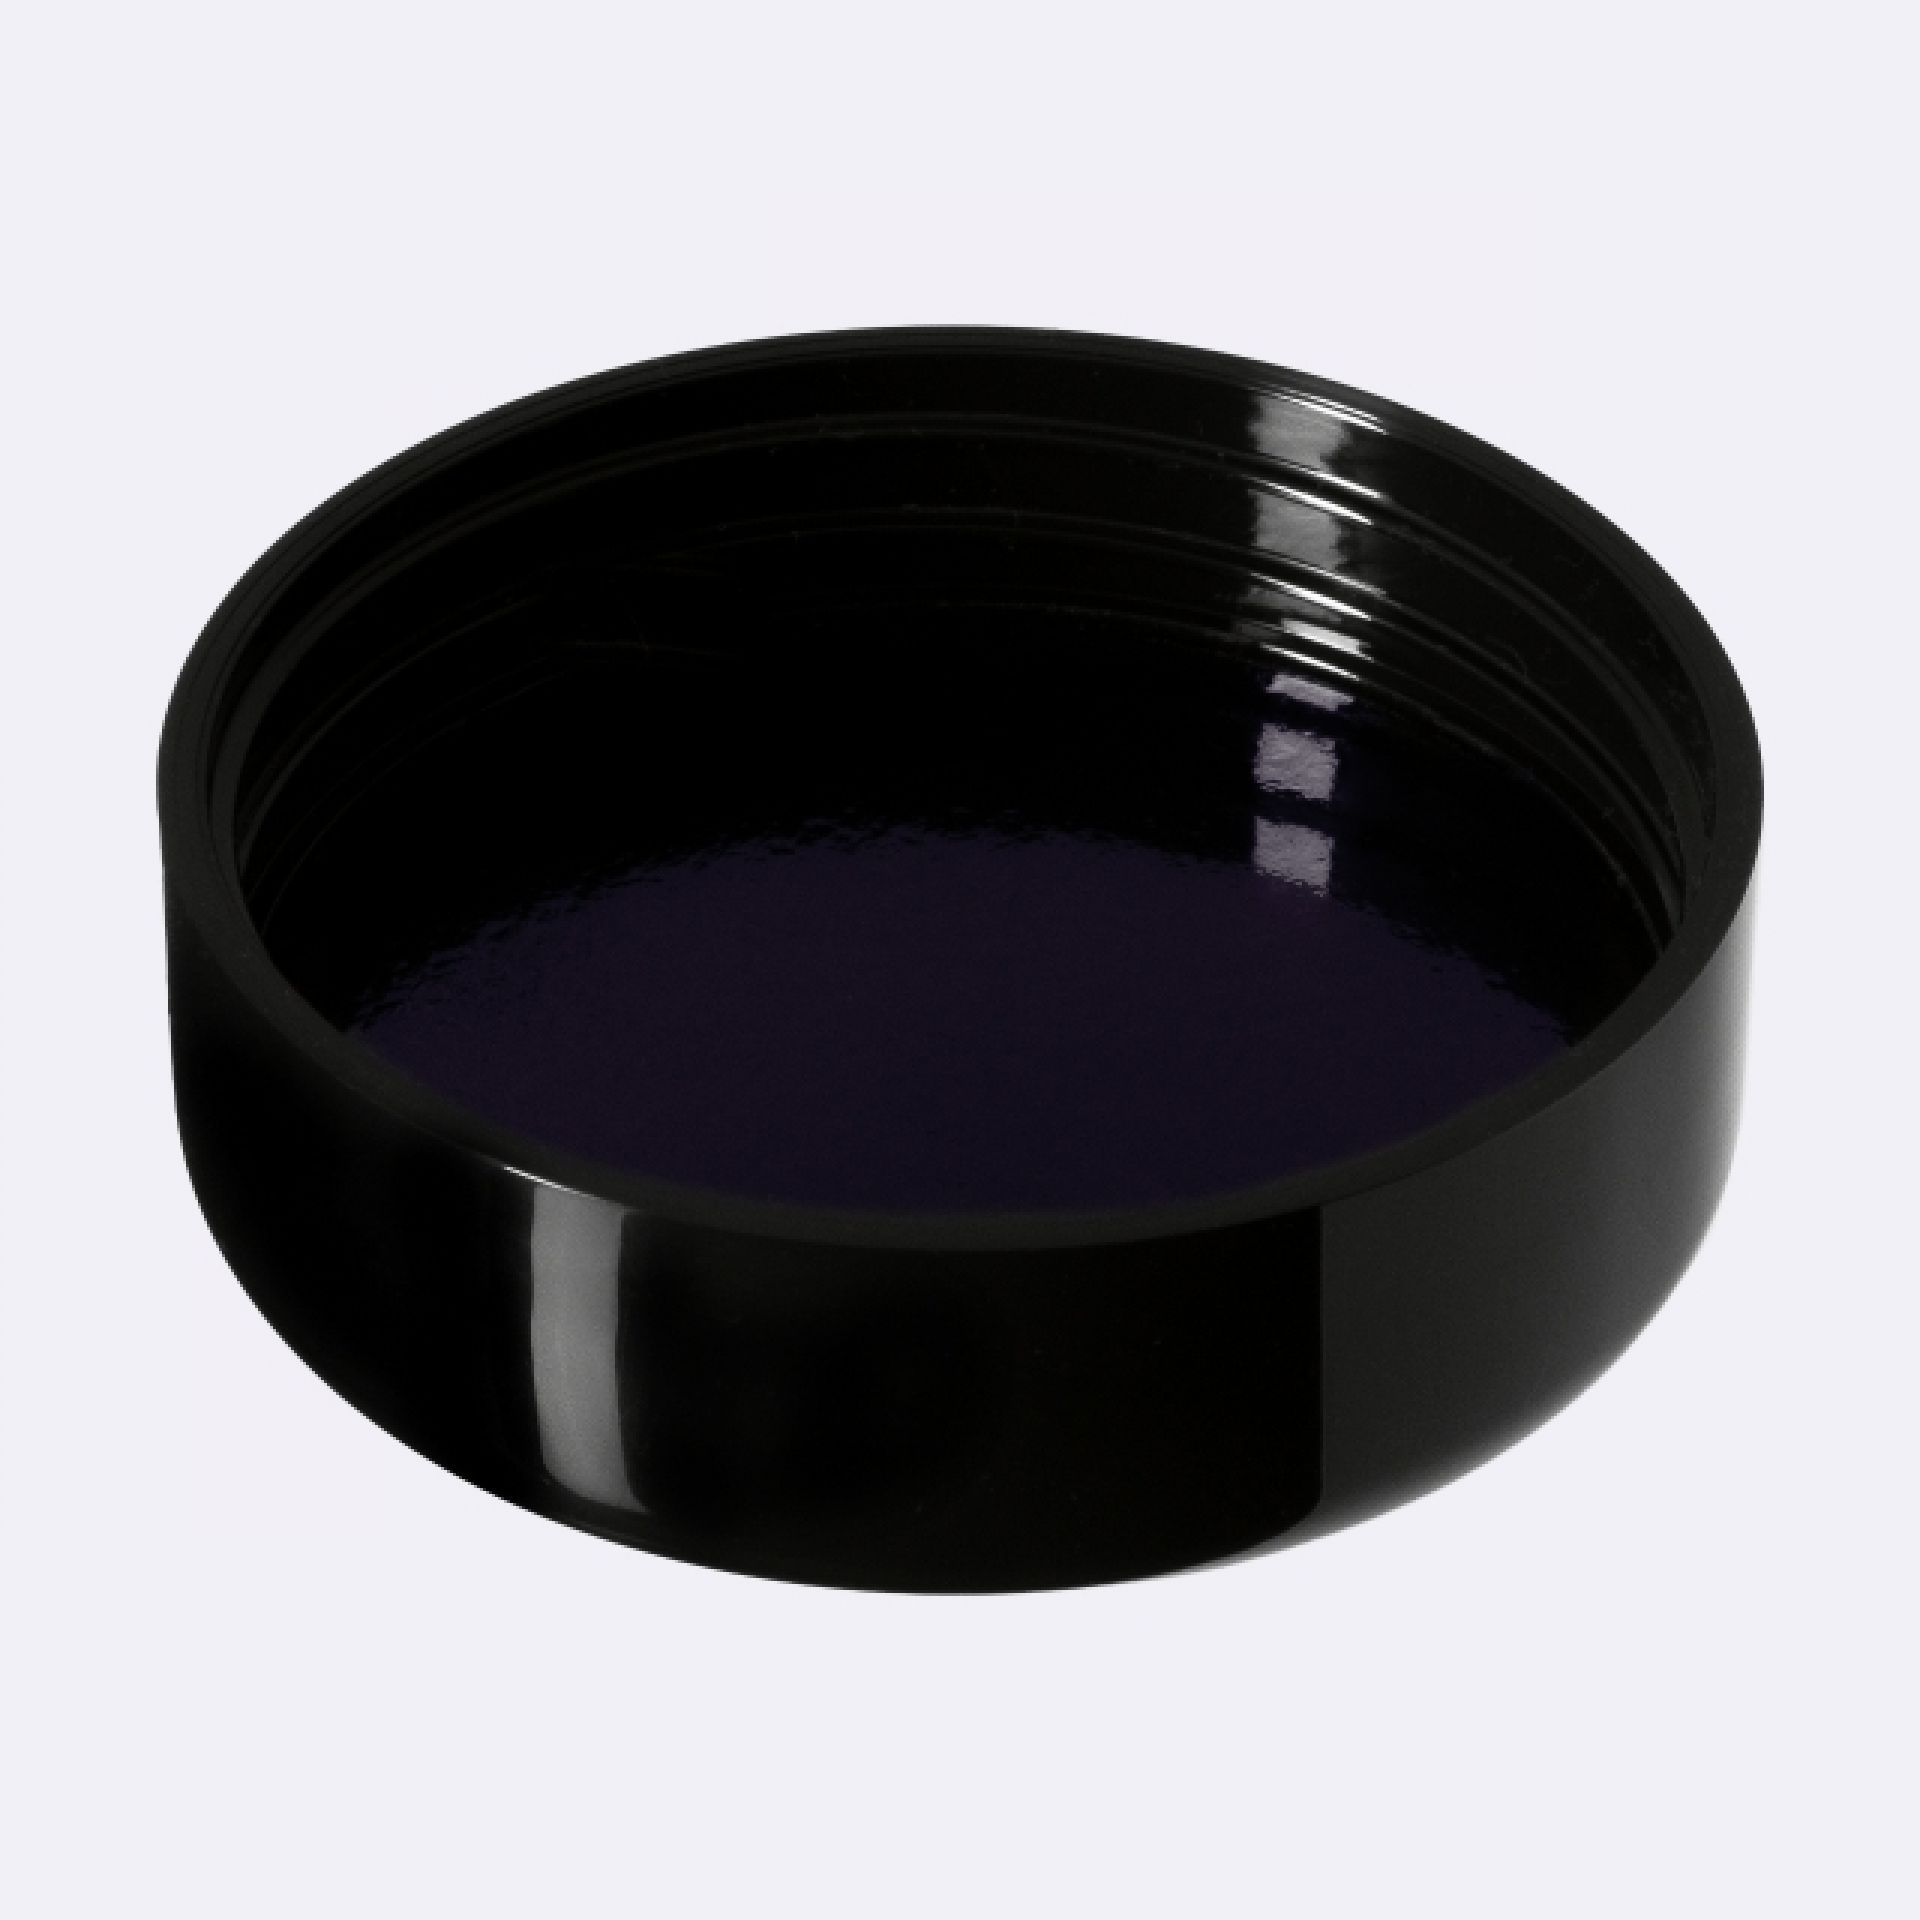 Lid Classic 53/400, SAN, black, glossy finish, violet Phan inlay (Saturn 150)